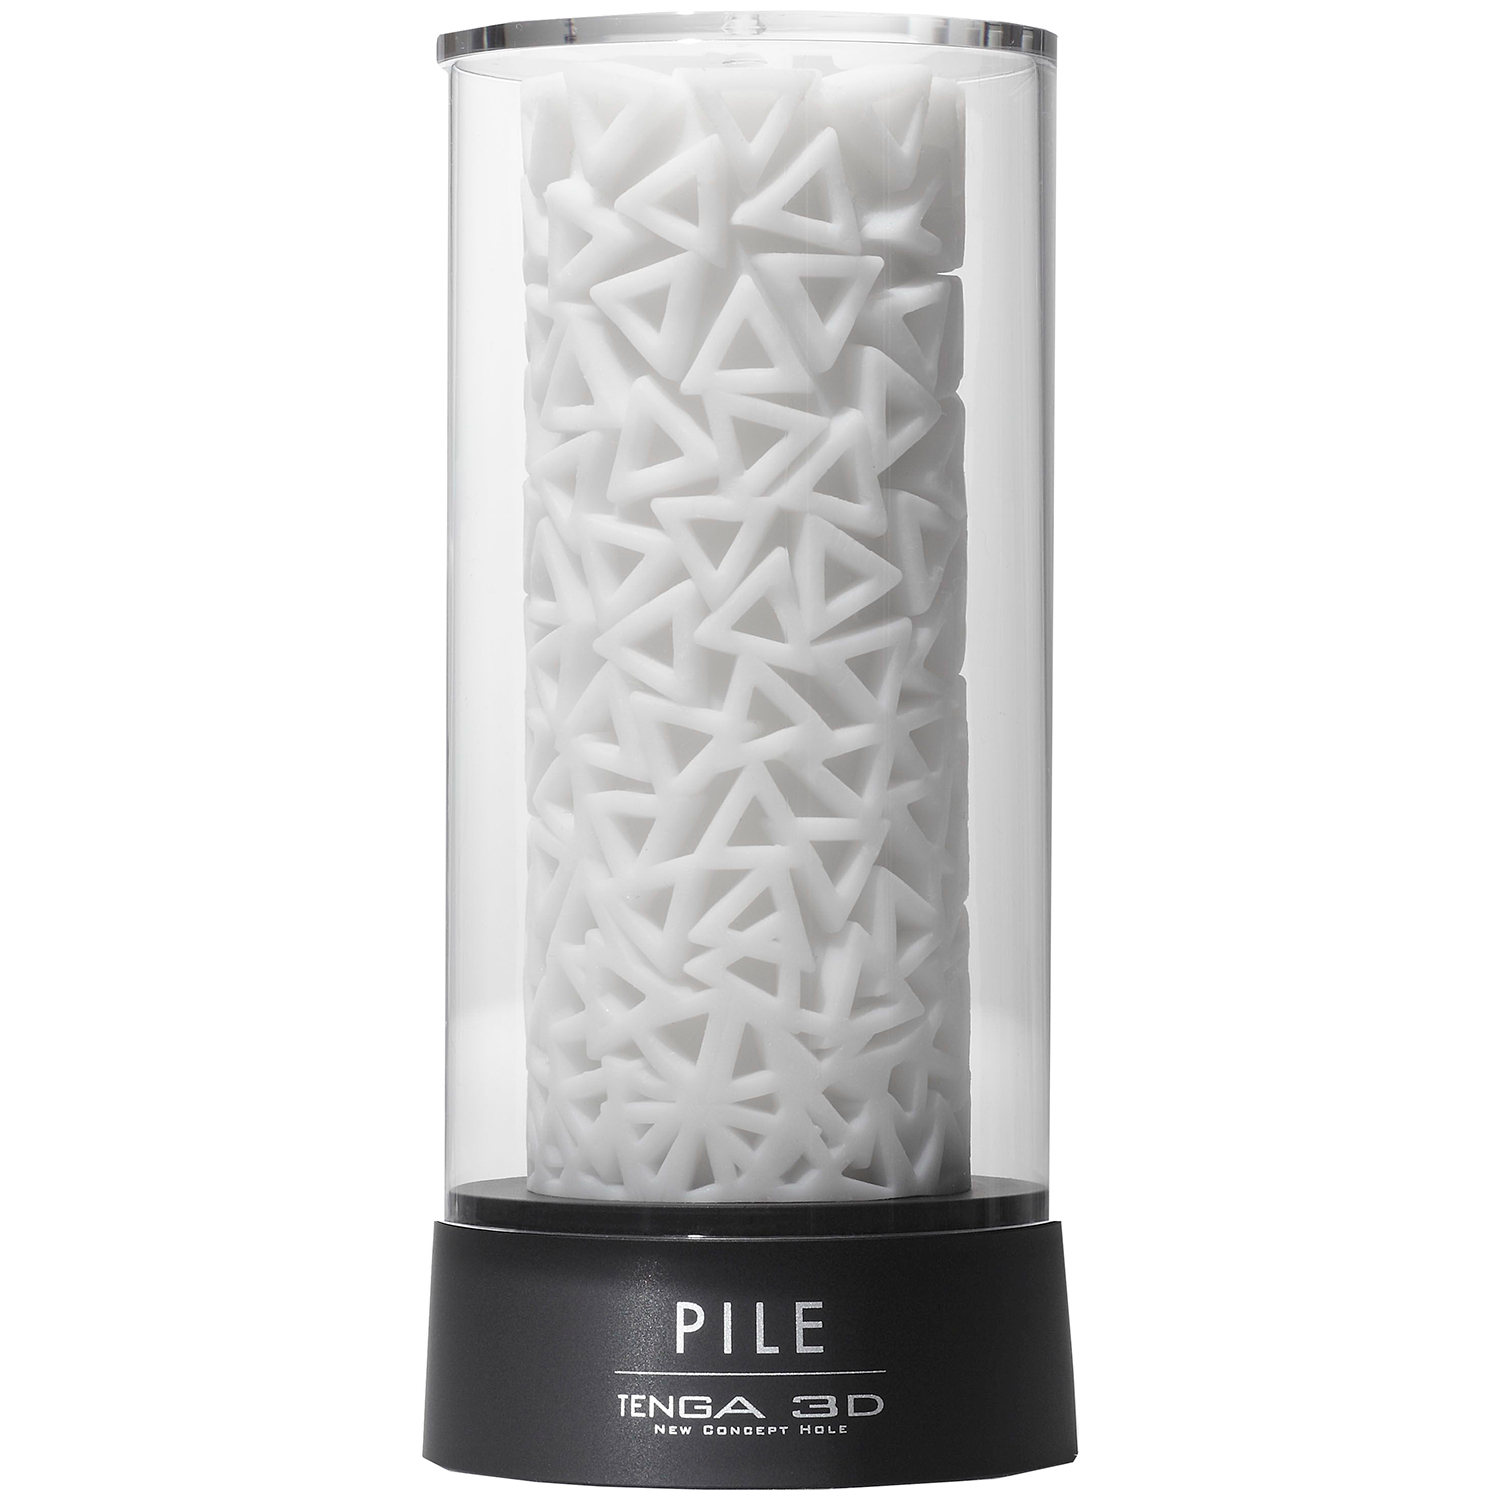 TENGA 3D Pile Onaniprodukt - White